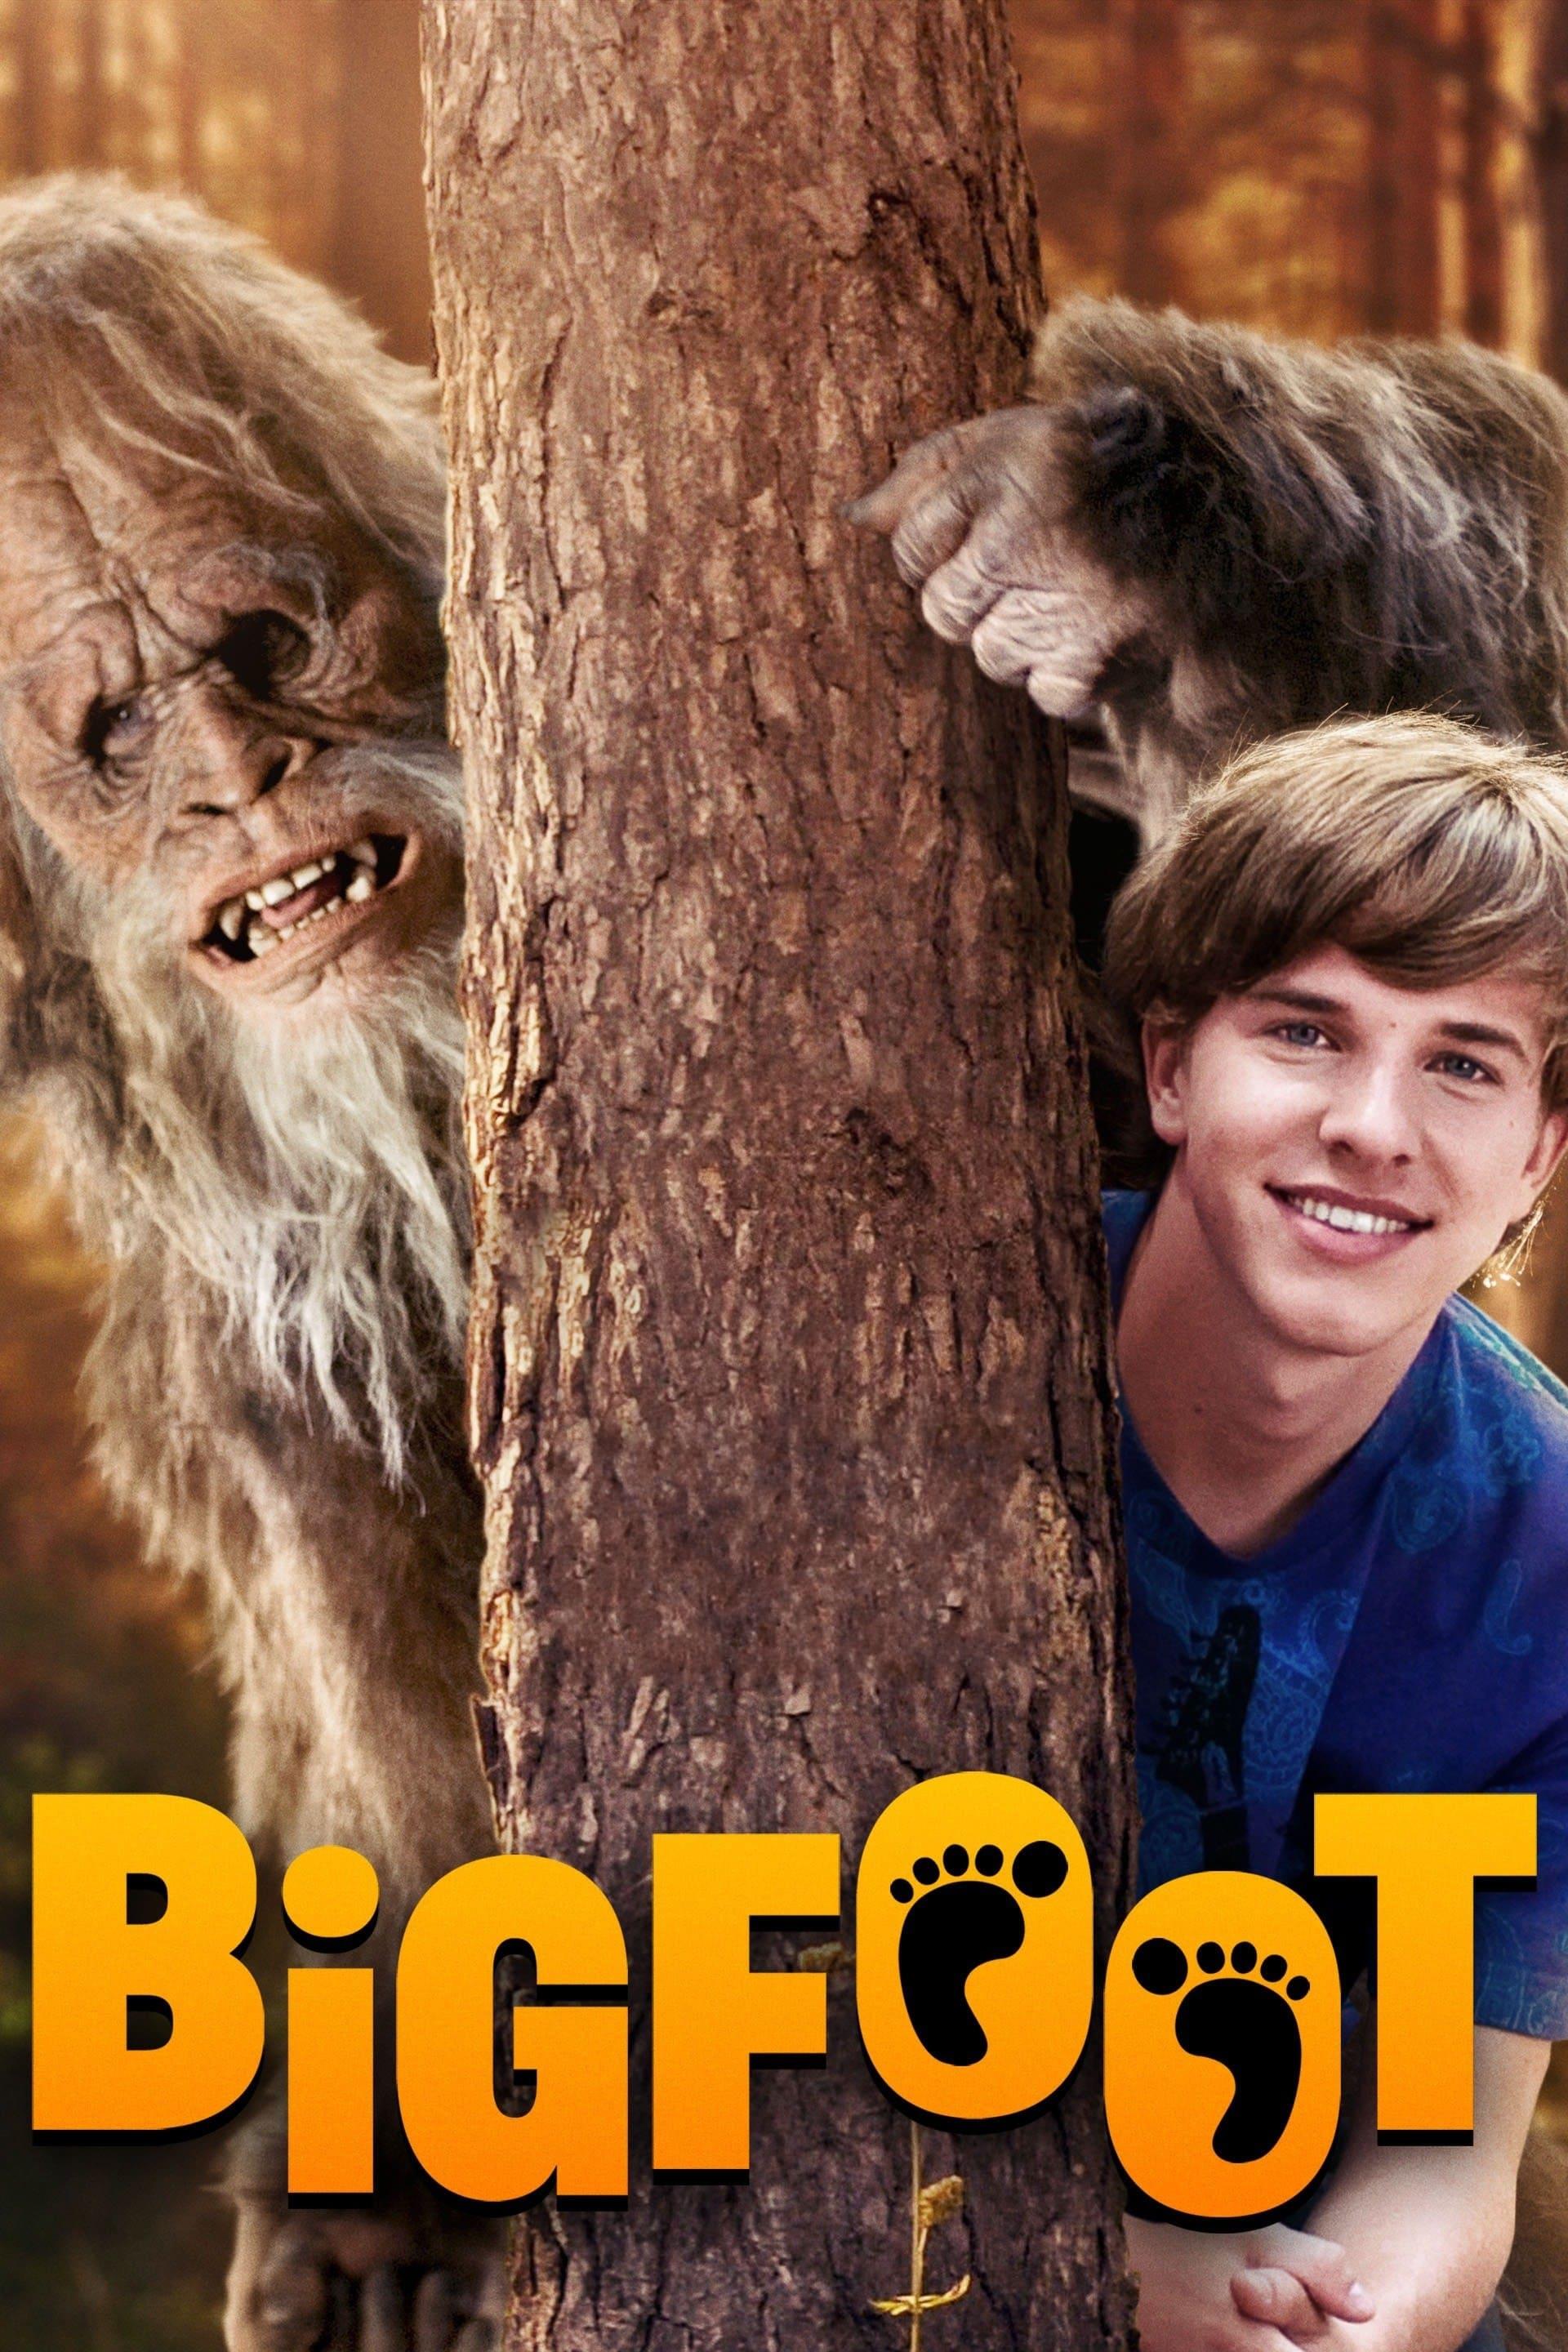 Bigfoot poster